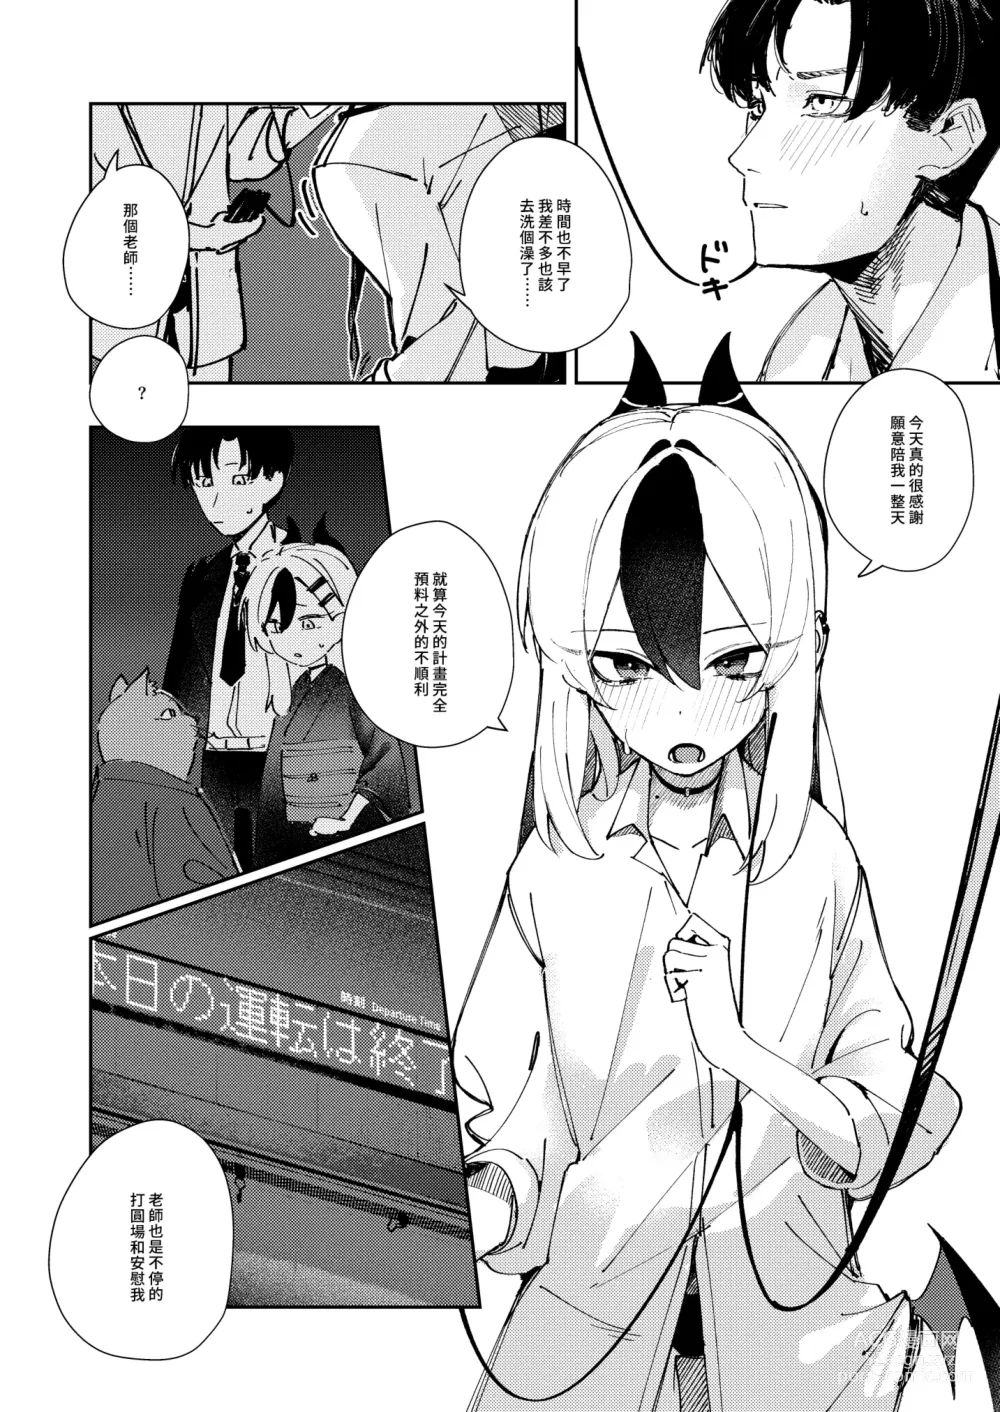 Page 12 of doujinshi 簡直就像戀人一樣